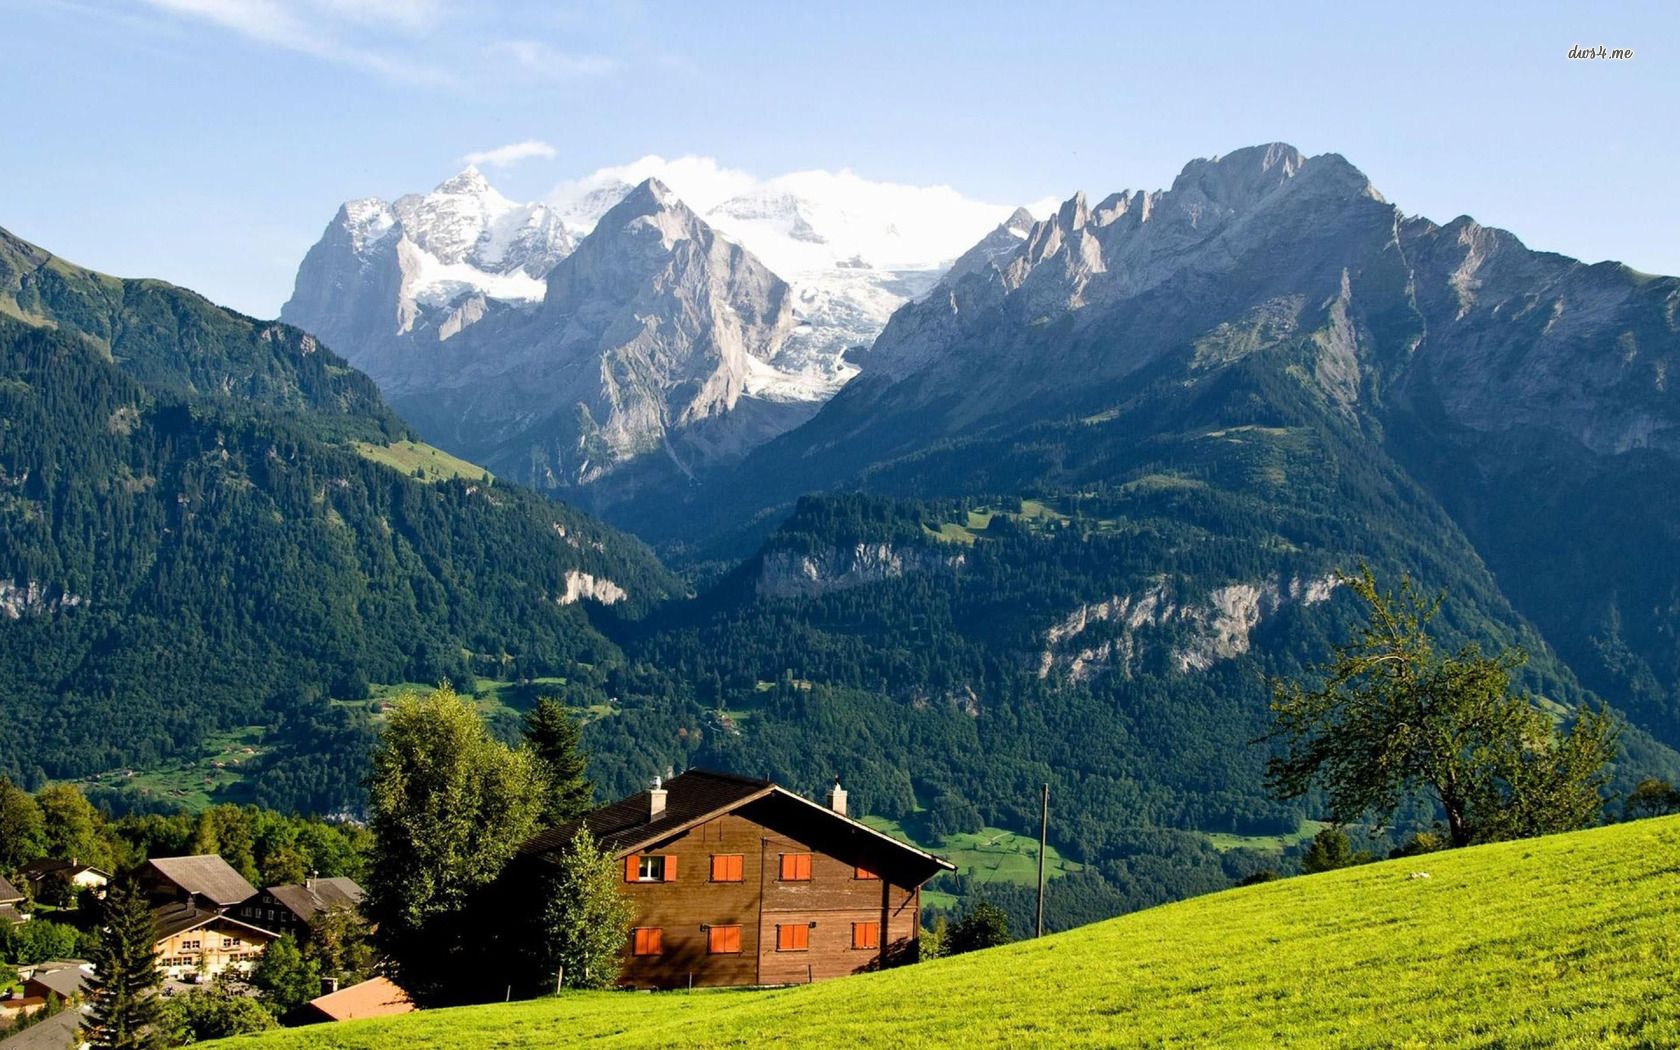 Hasliberg, Switzerland HD wallpaper. Switzerland wallpaper, Travel wallpaper, Landscape photography nature